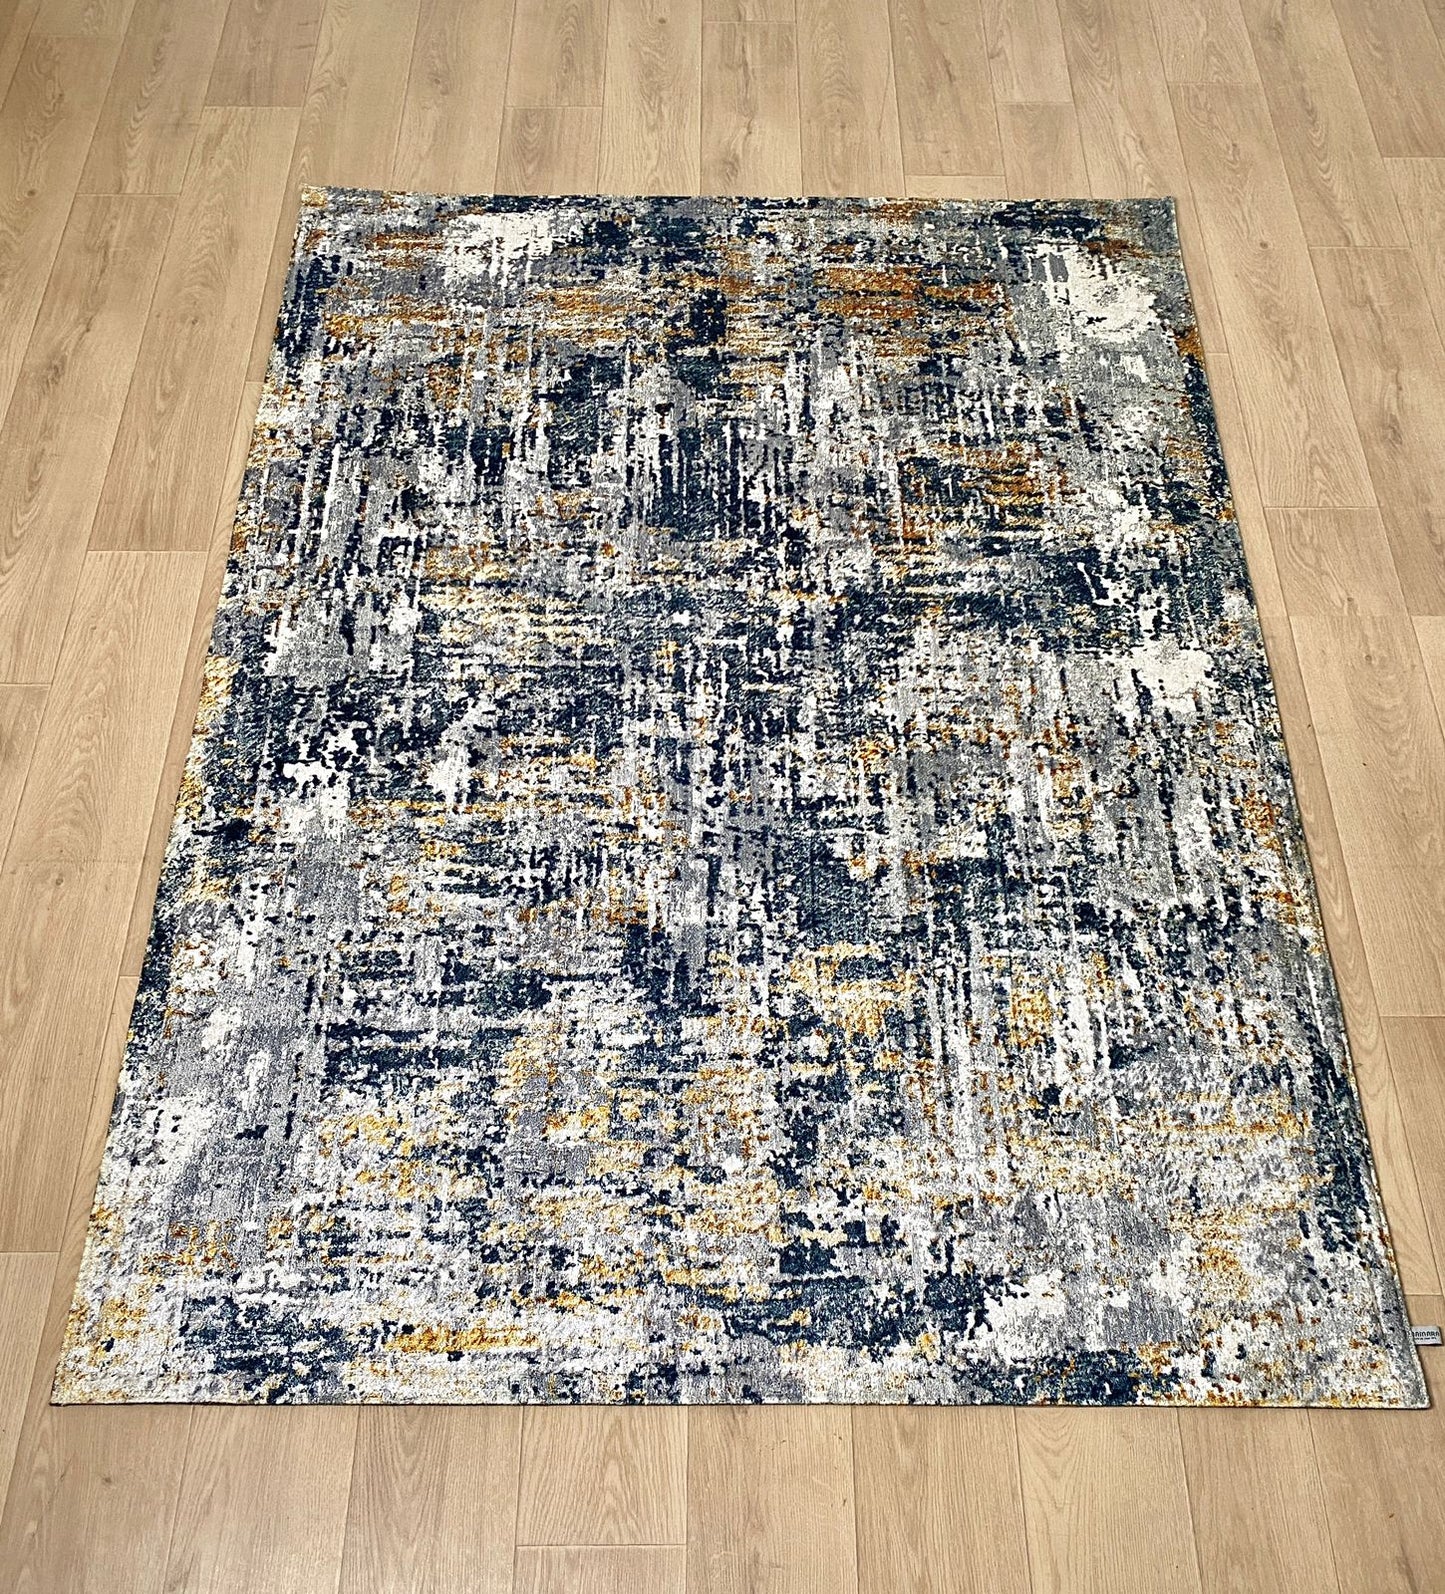 Karpet Abstrak (BK-A-0002) - Black,Grey,Brown,Gold